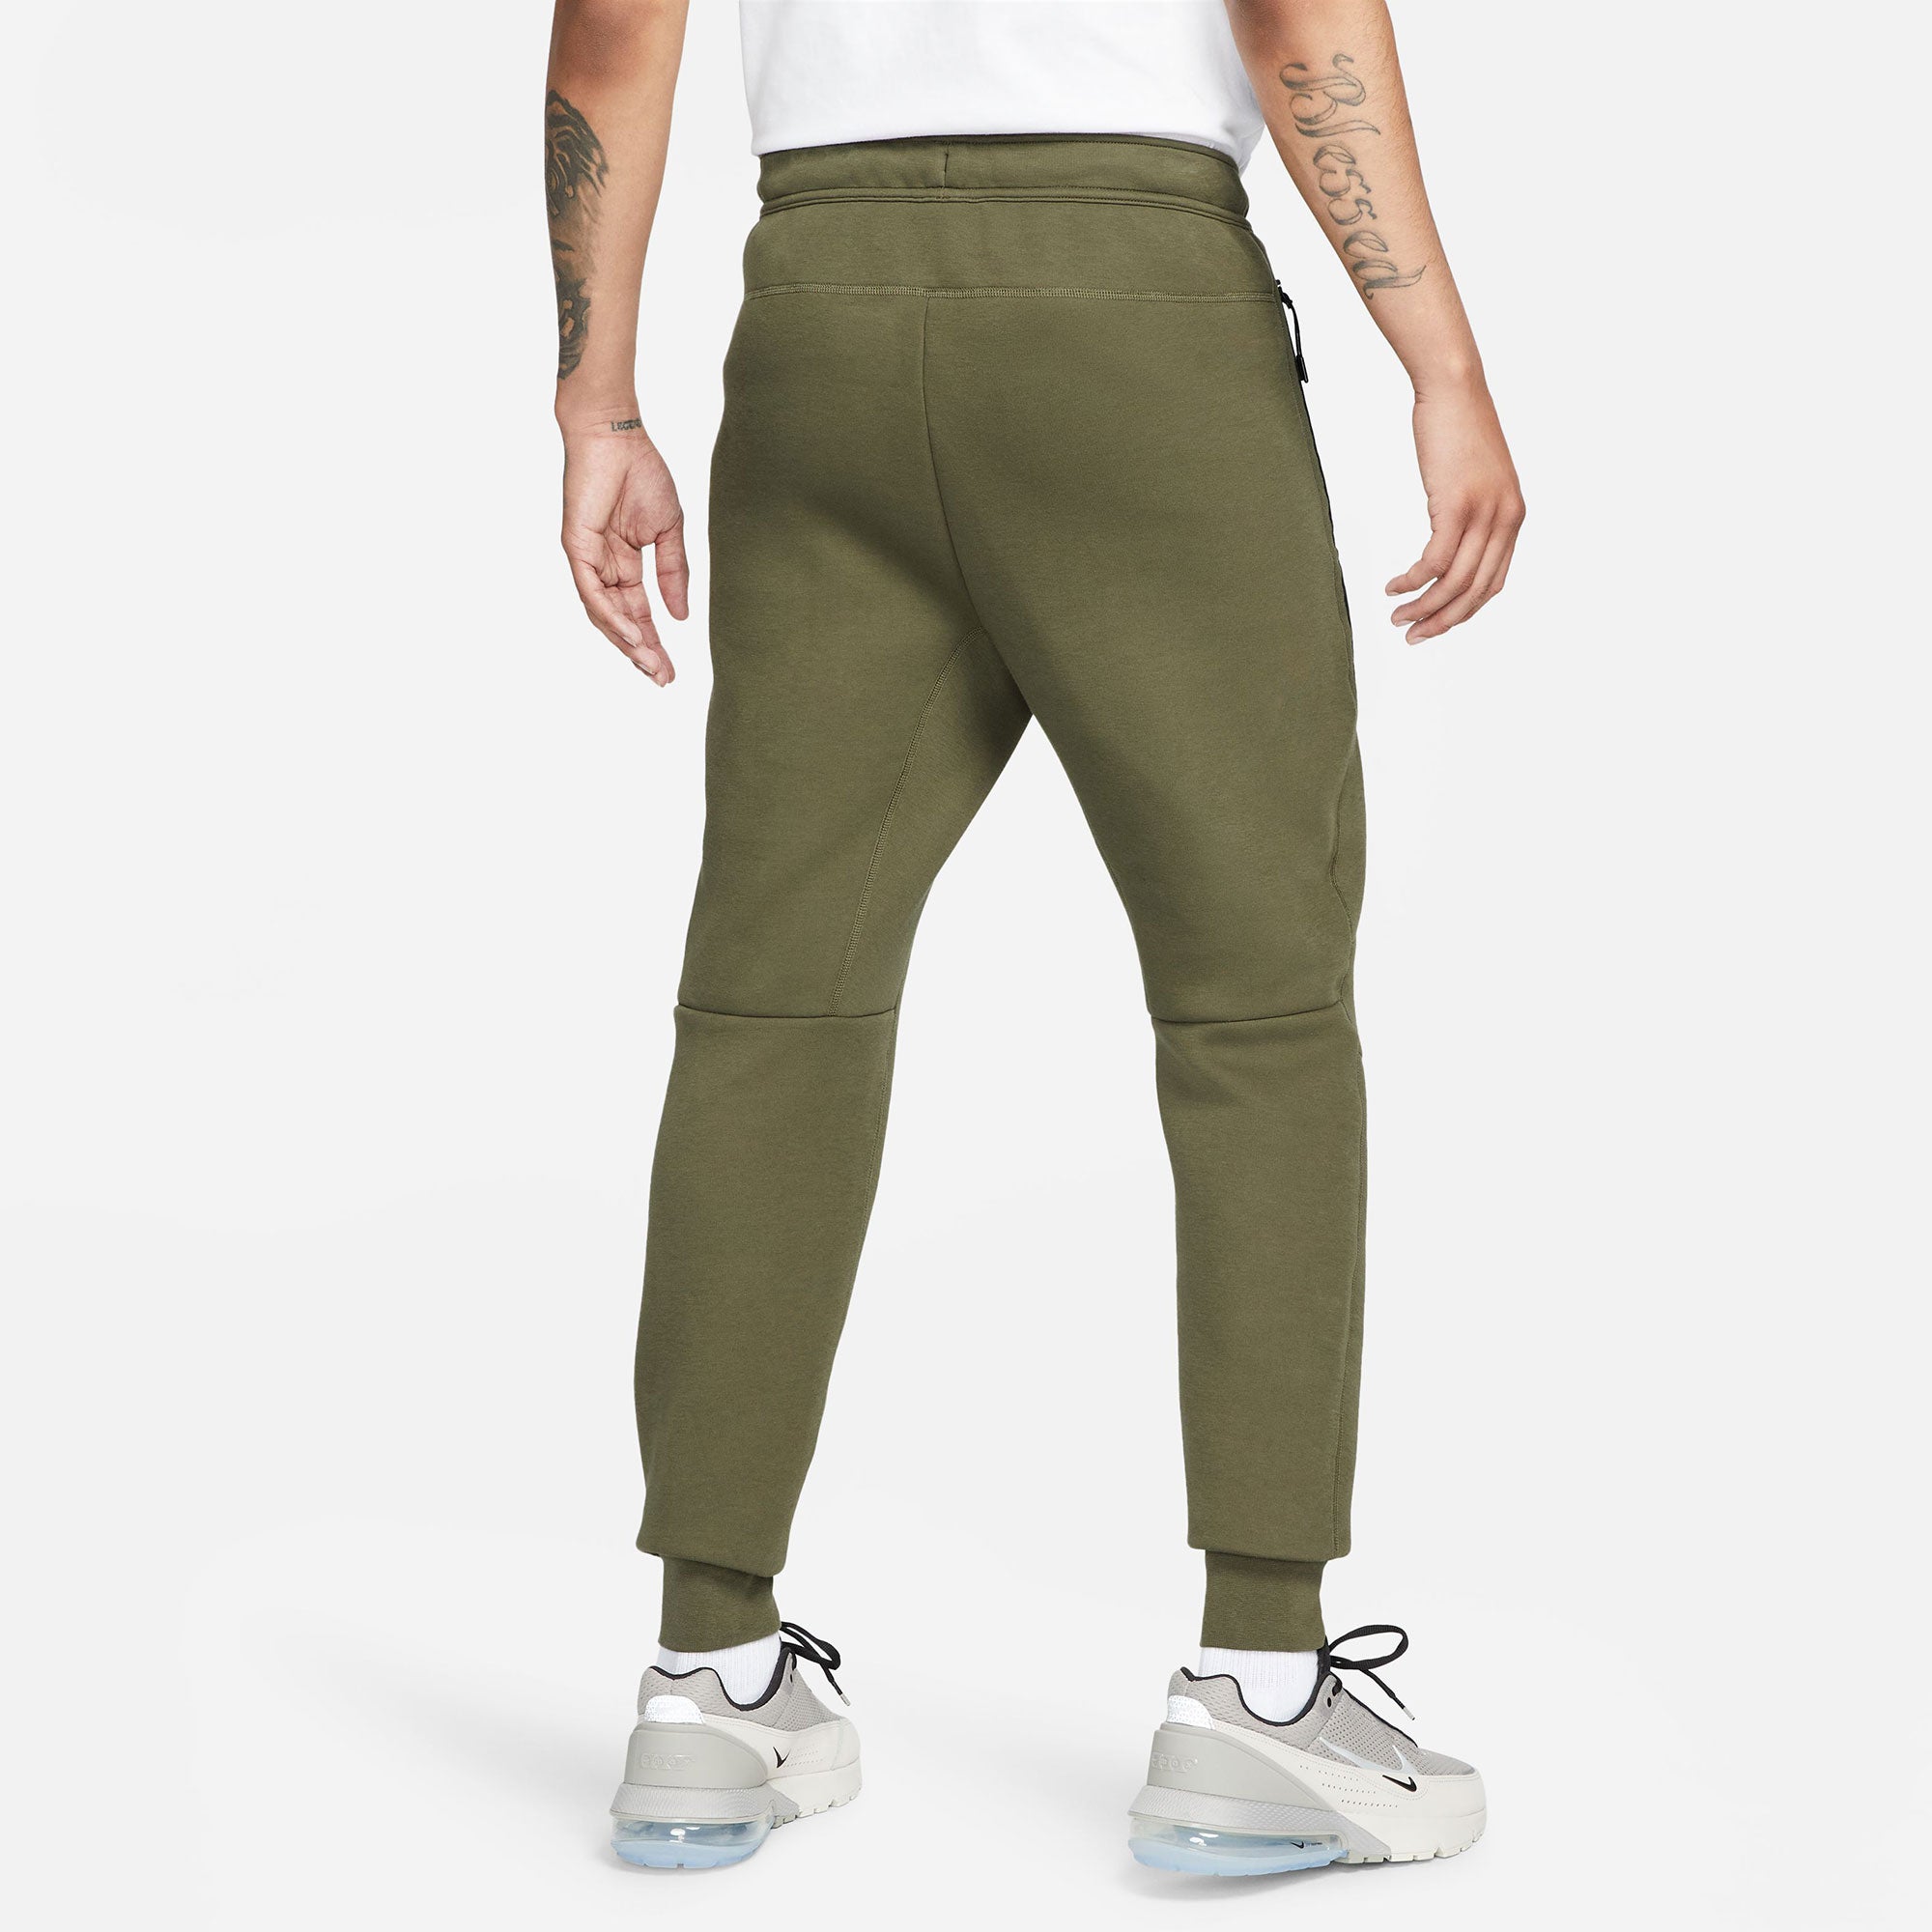 Nike Tech Fleece Men's Pants Brown (2)